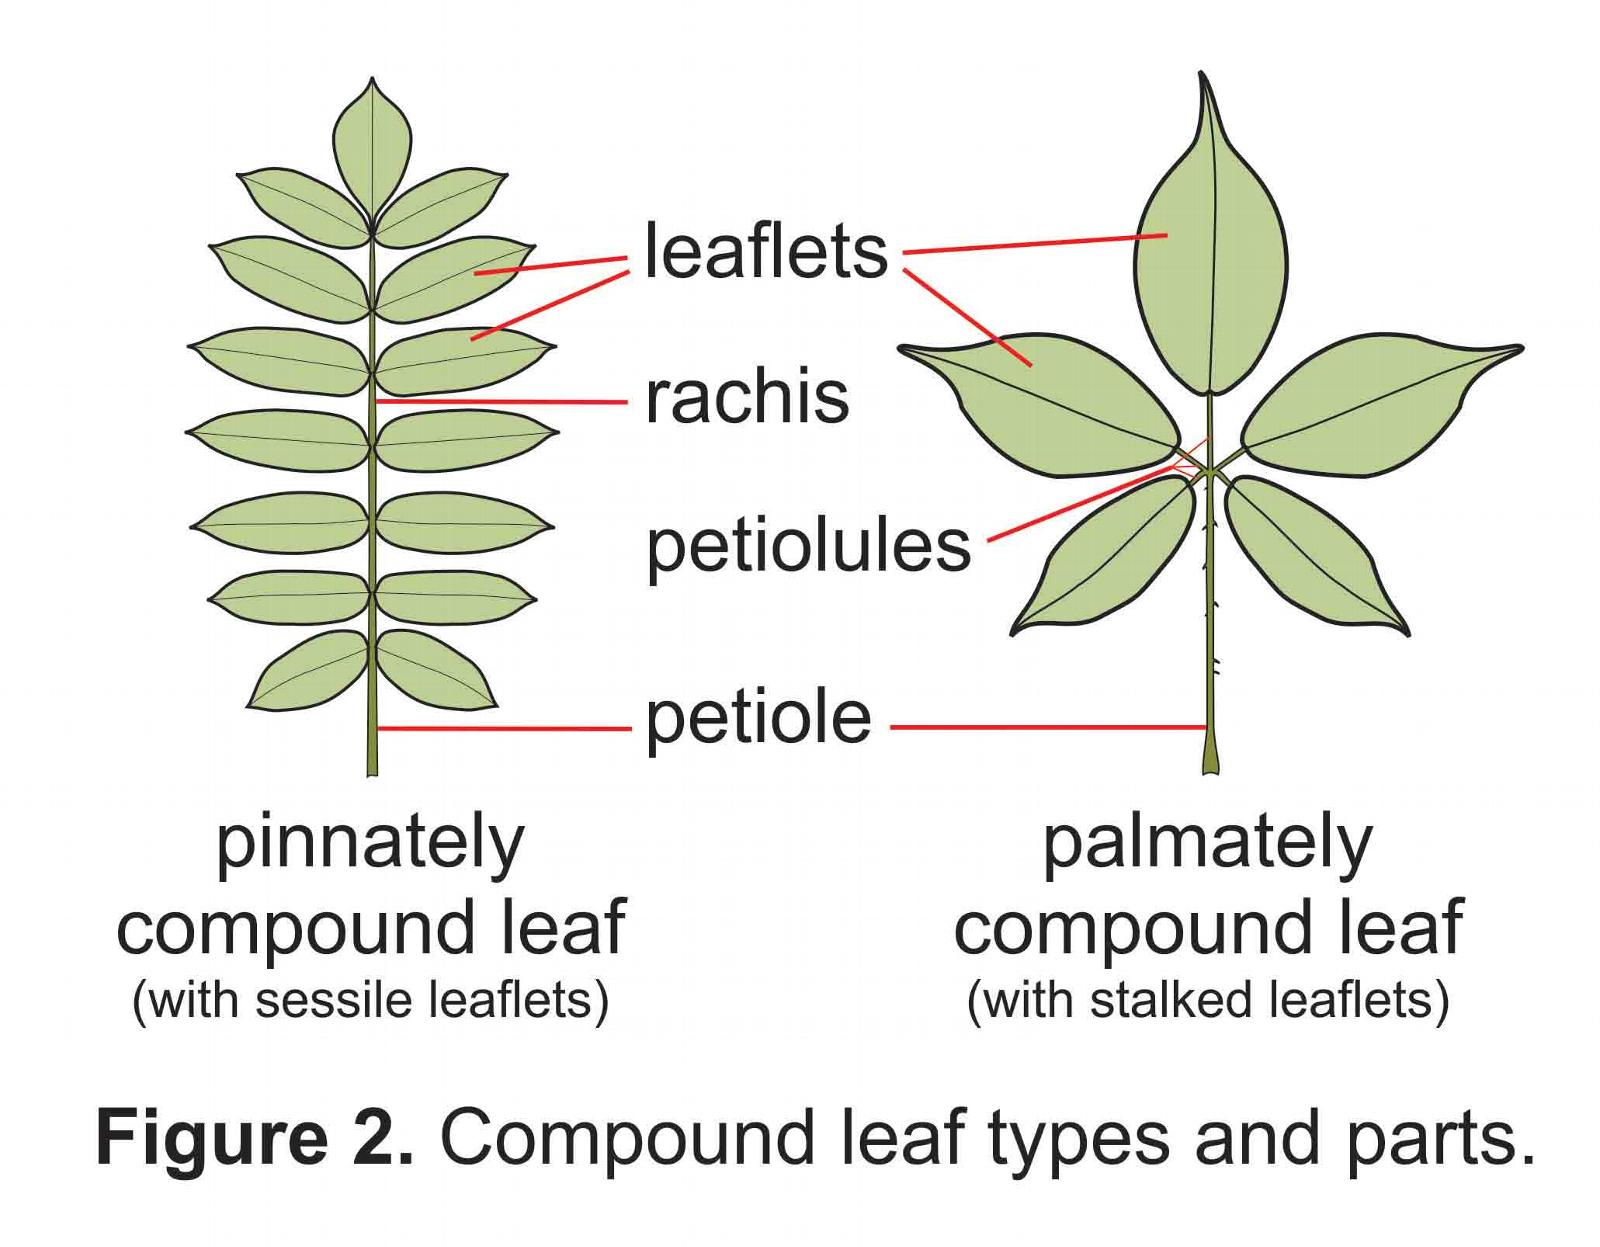 Leaf description glossary